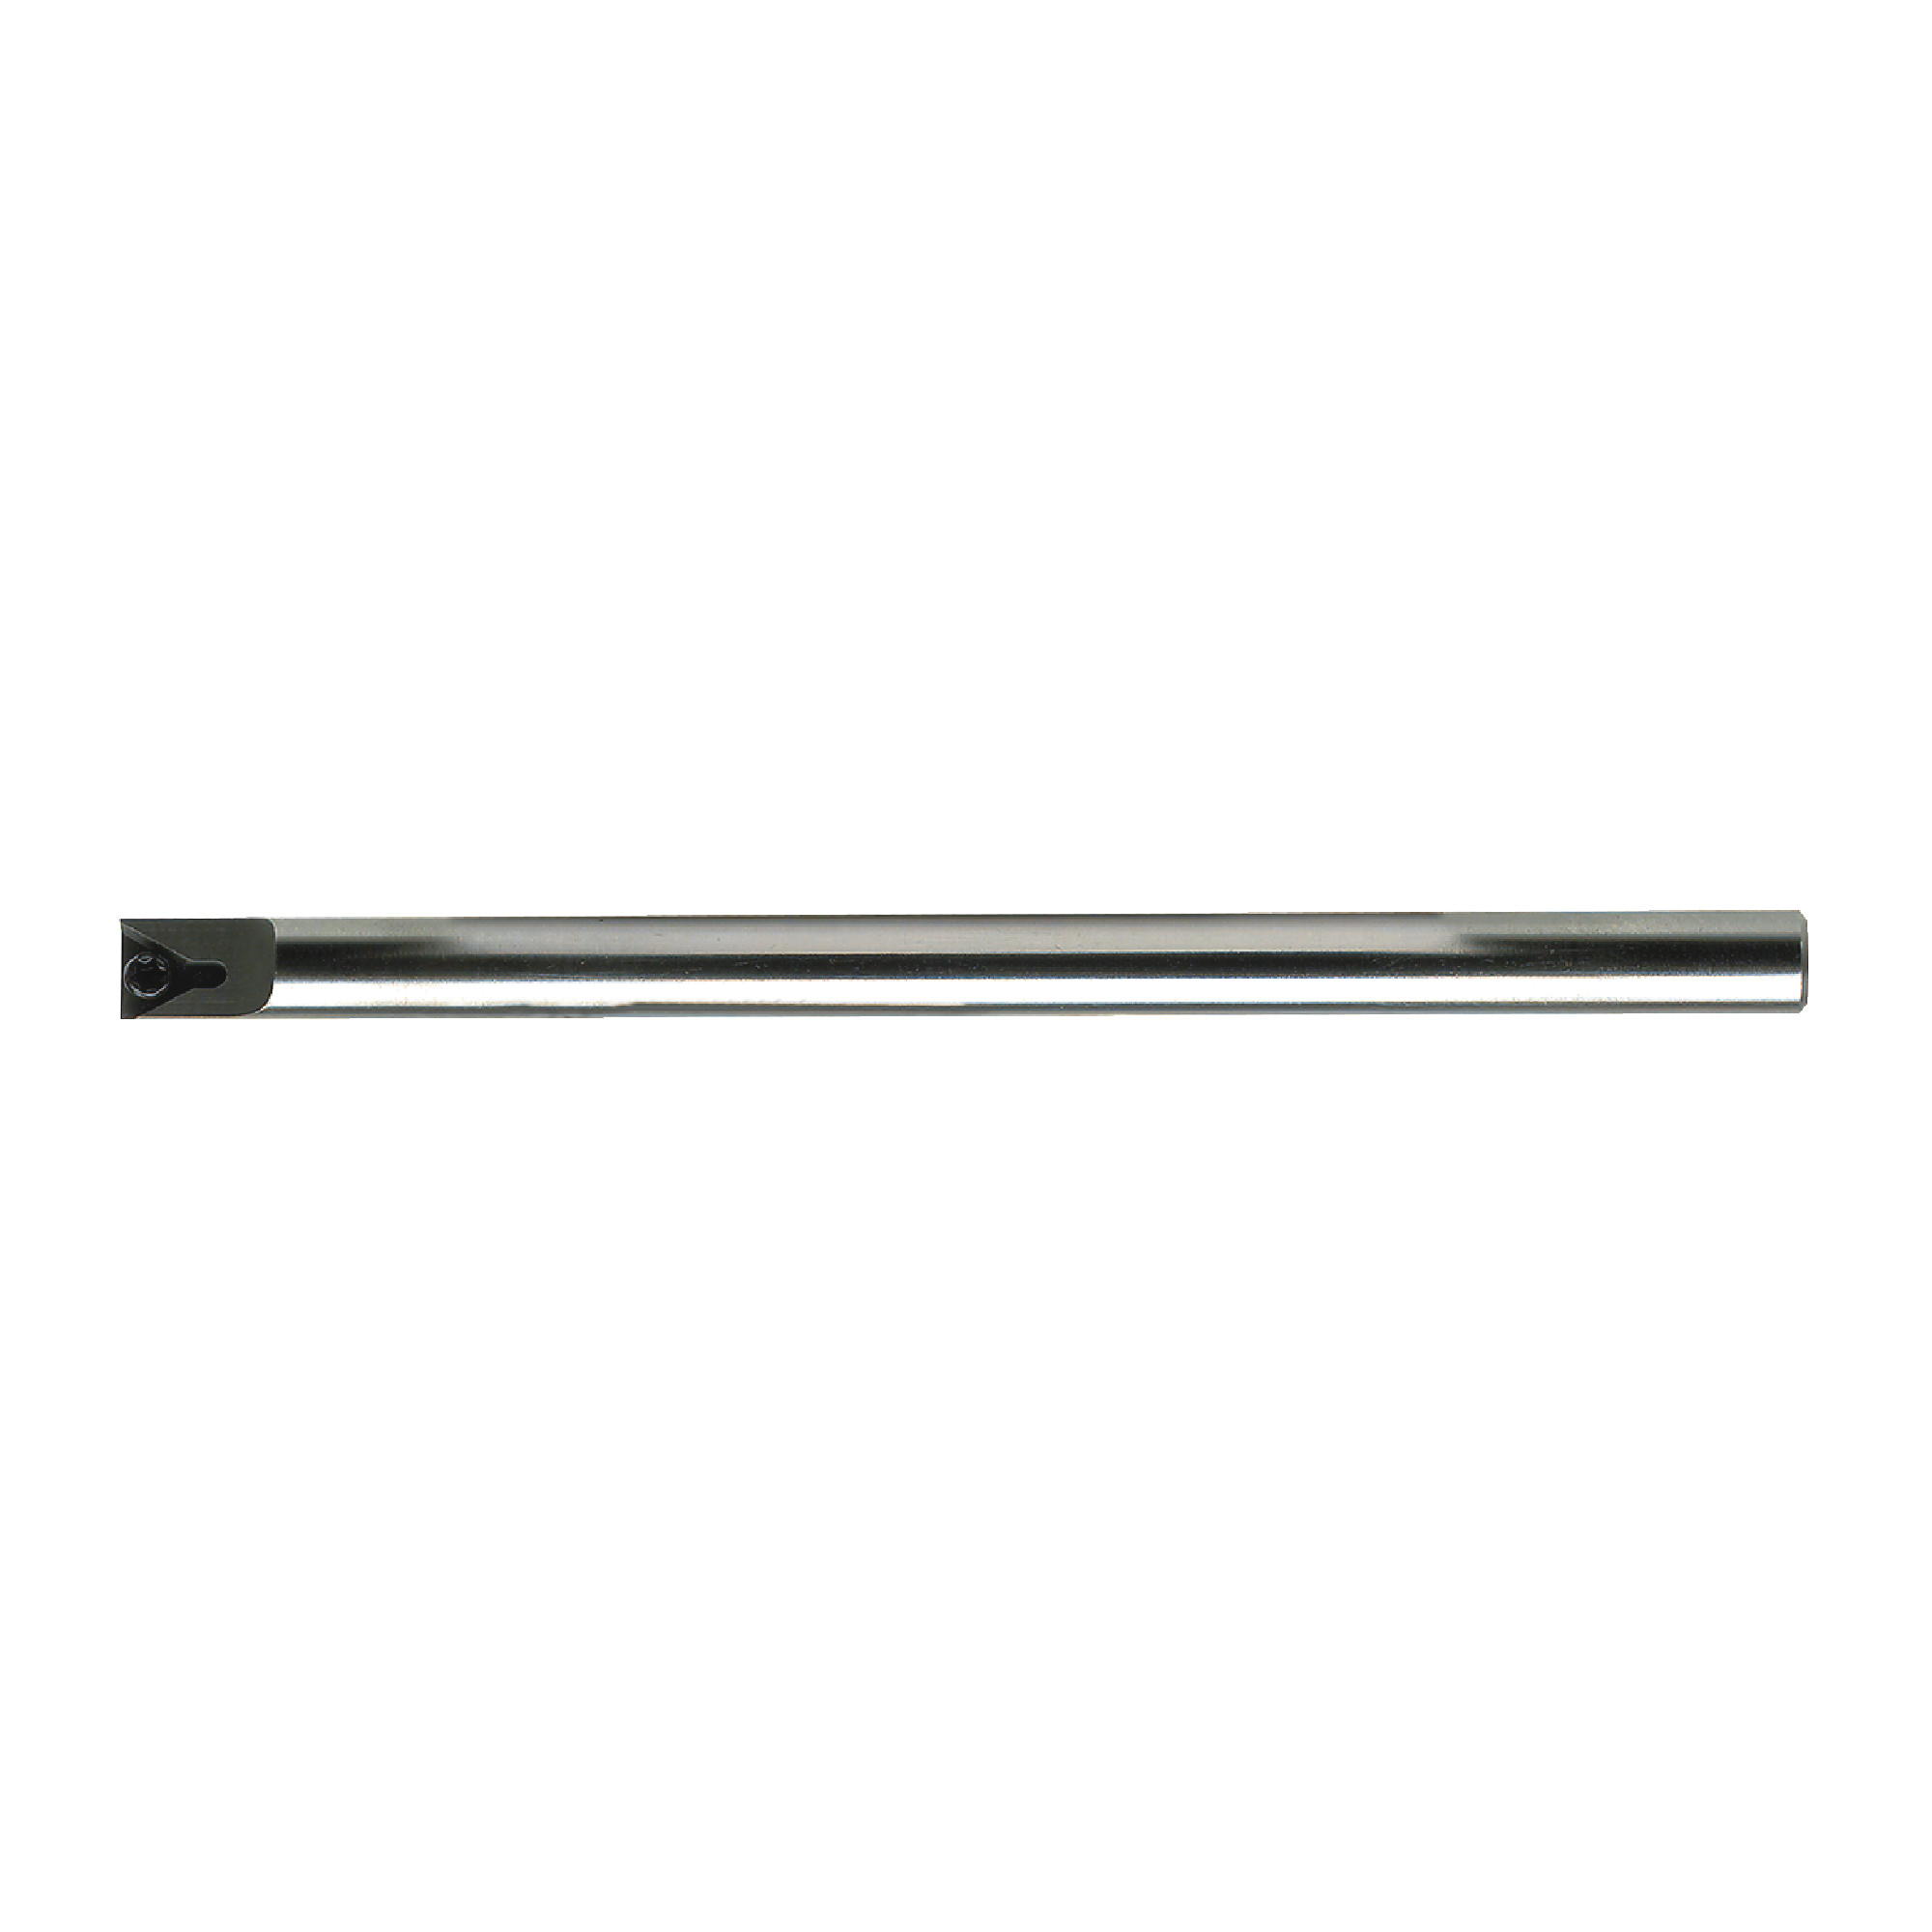 EVEREDE - SB2005 / Steel Boring Bar / 0.250" Shank / TDAB / Right Hand